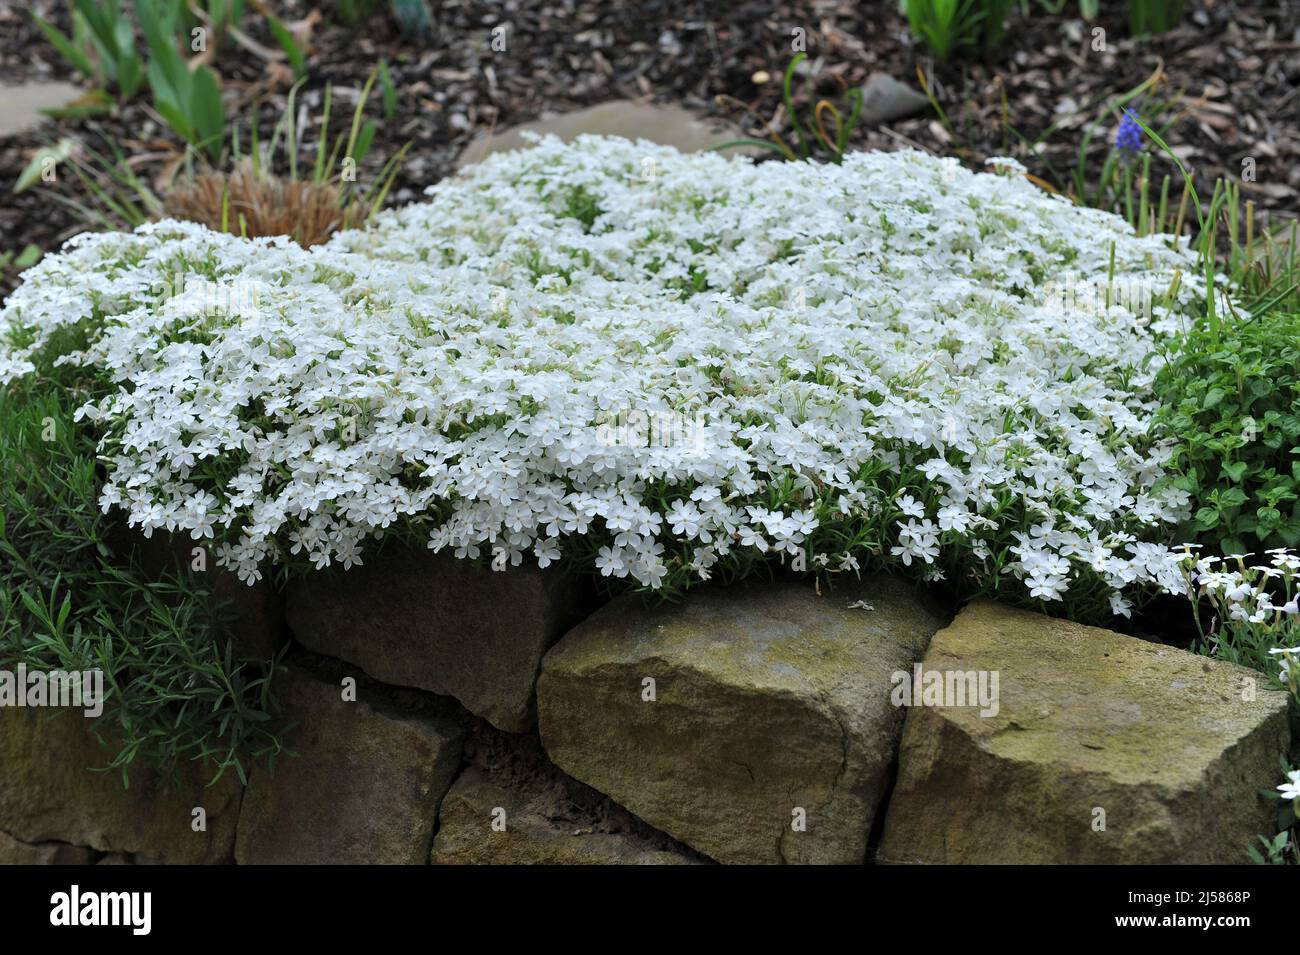 White moss phlox (Phlox subulata) Maischnee bloom in a garden in May Stock Photo